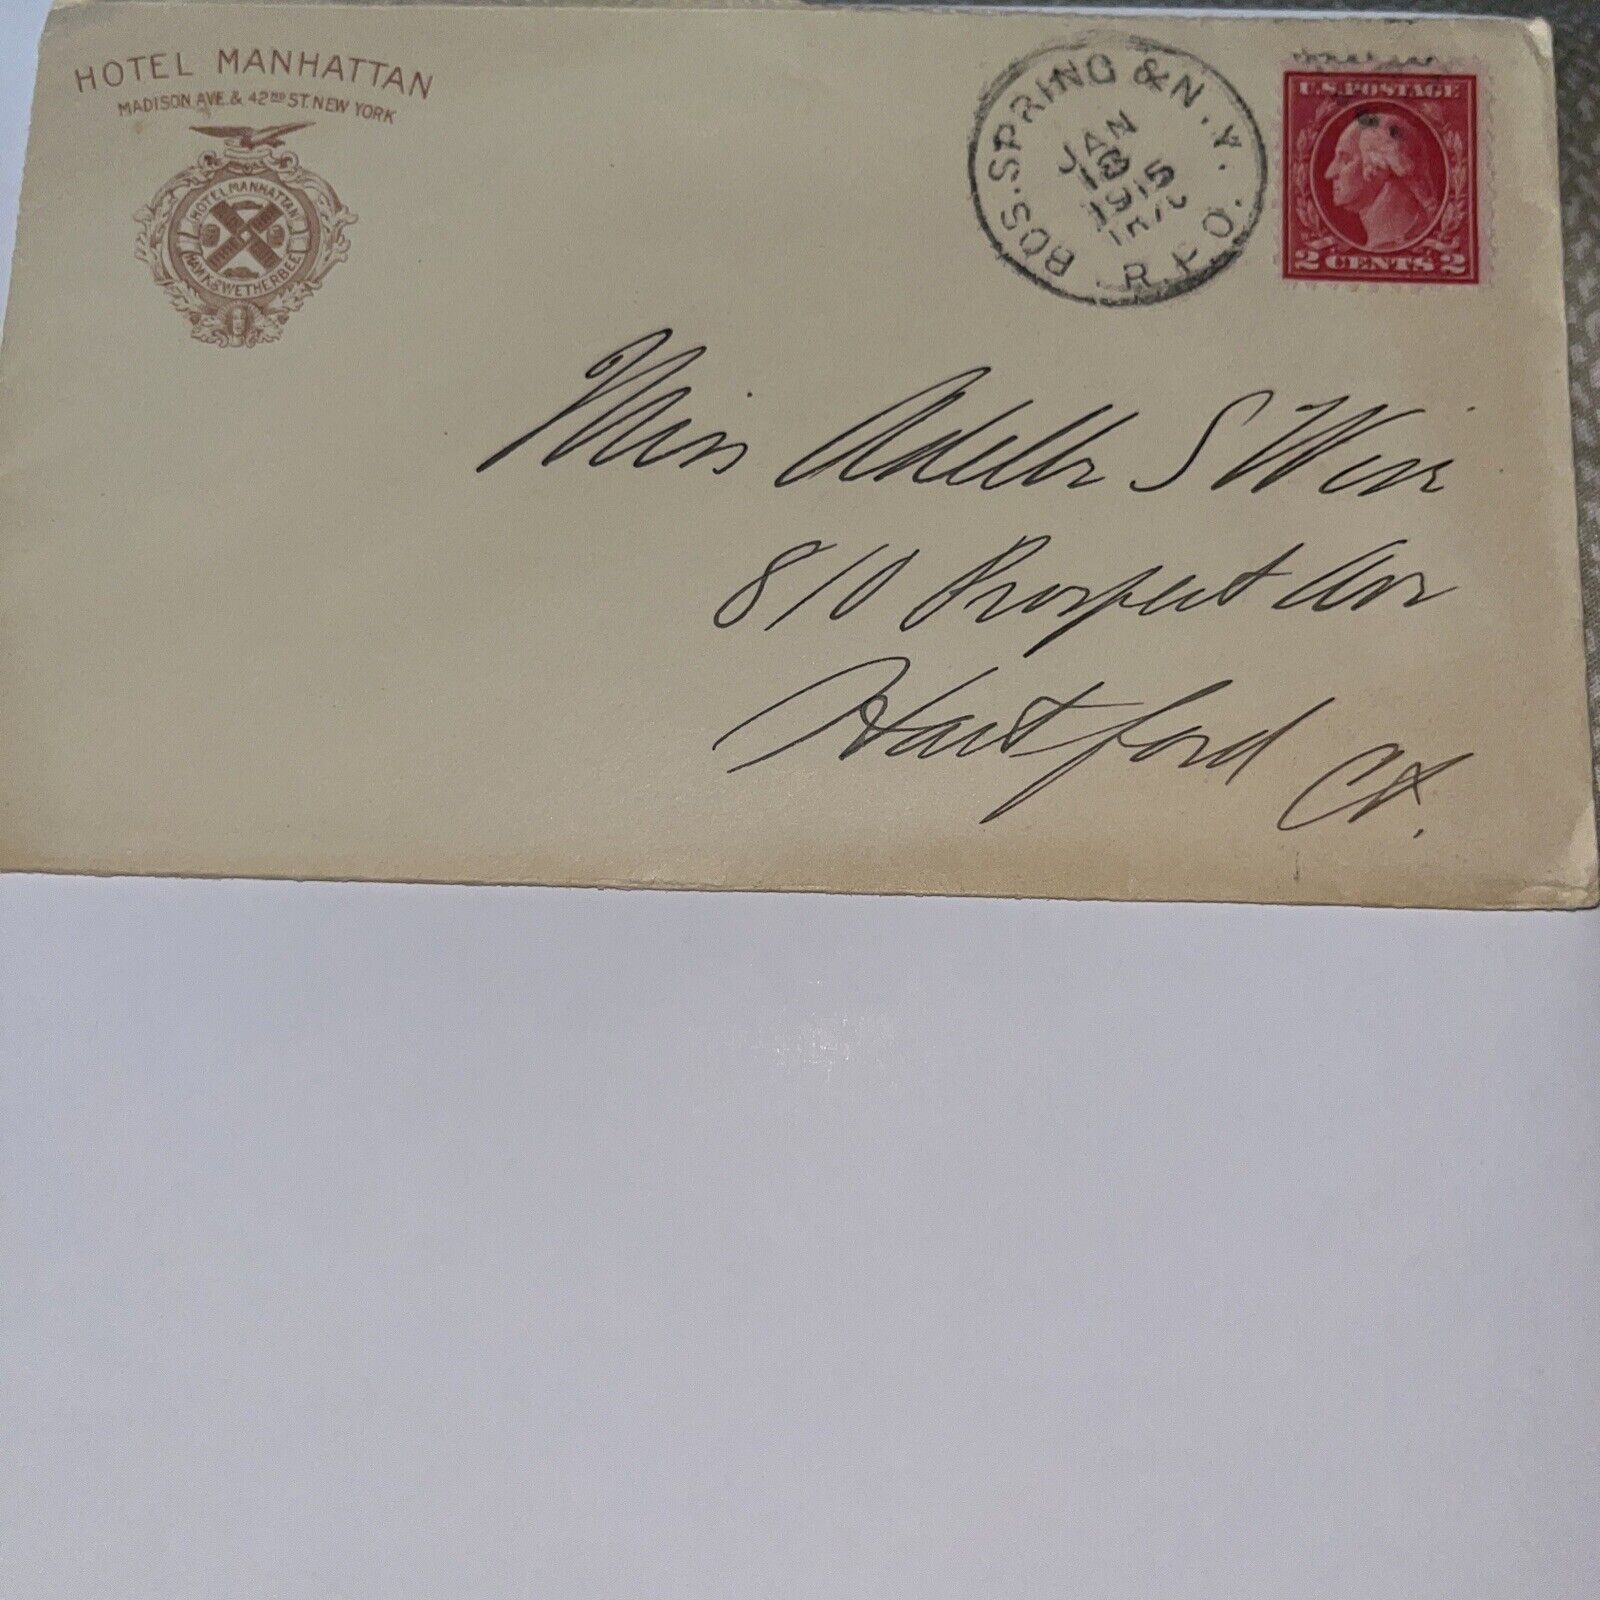 Antique 1915 Hotel Manhattan Stationary Envelope Cover New York NY to Hartford